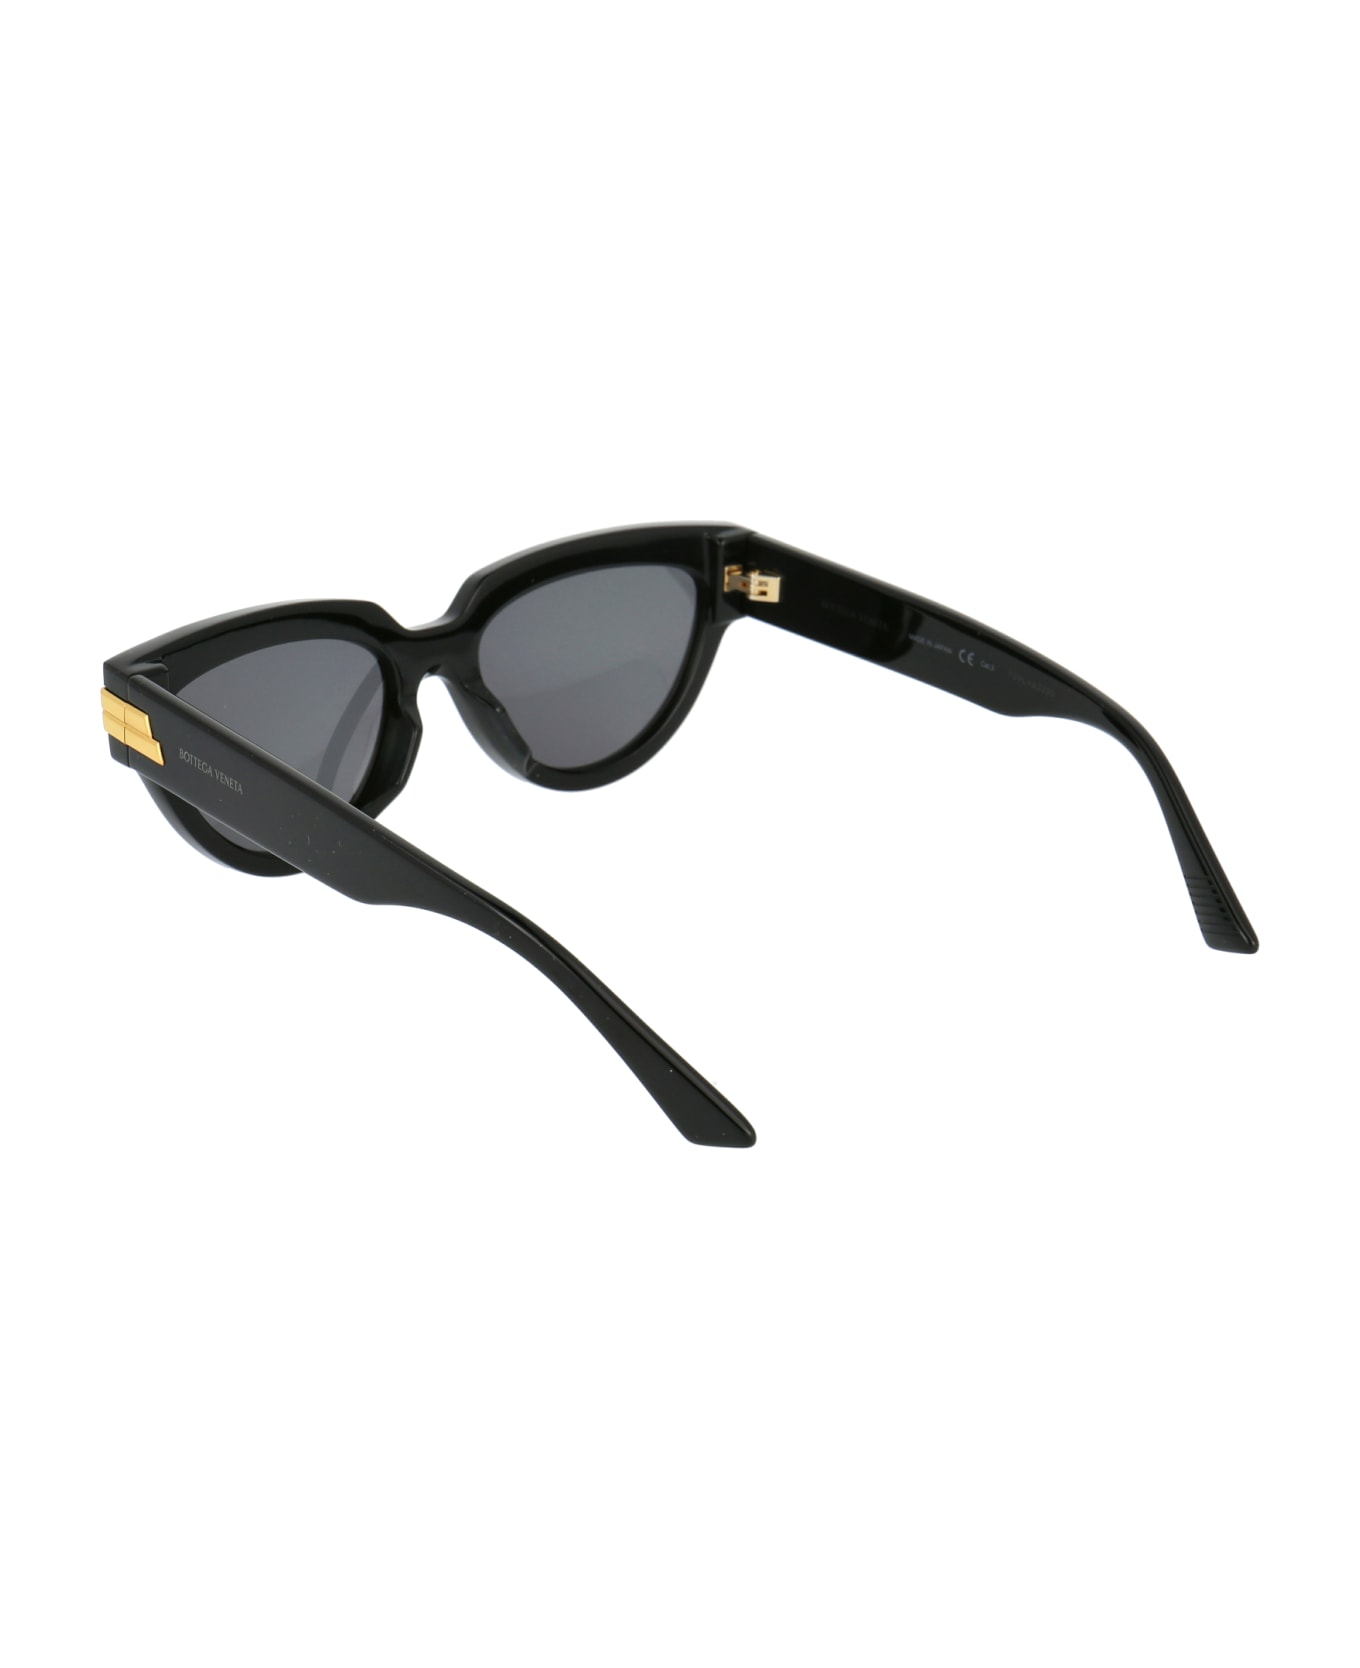 Bottega Veneta Eyewear Bv1035s Sunglasses - 001 BLACK BLACK GREY サングラス